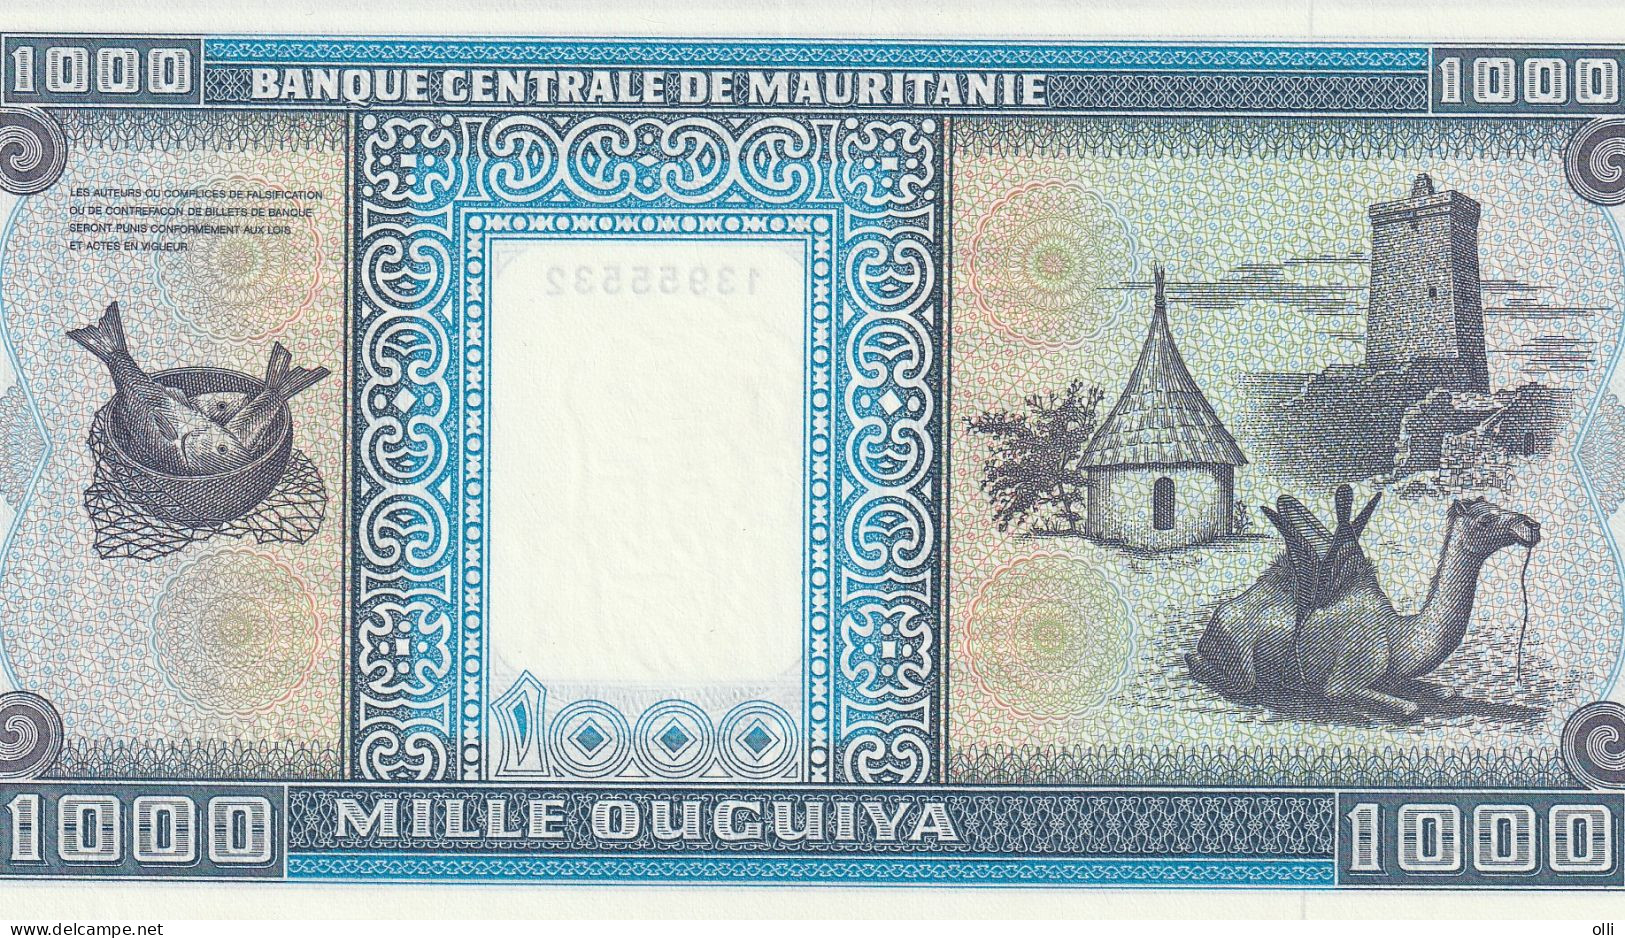 Mauritania 1000 Ouguiya 1974 P-7 UNC - Mauritanië